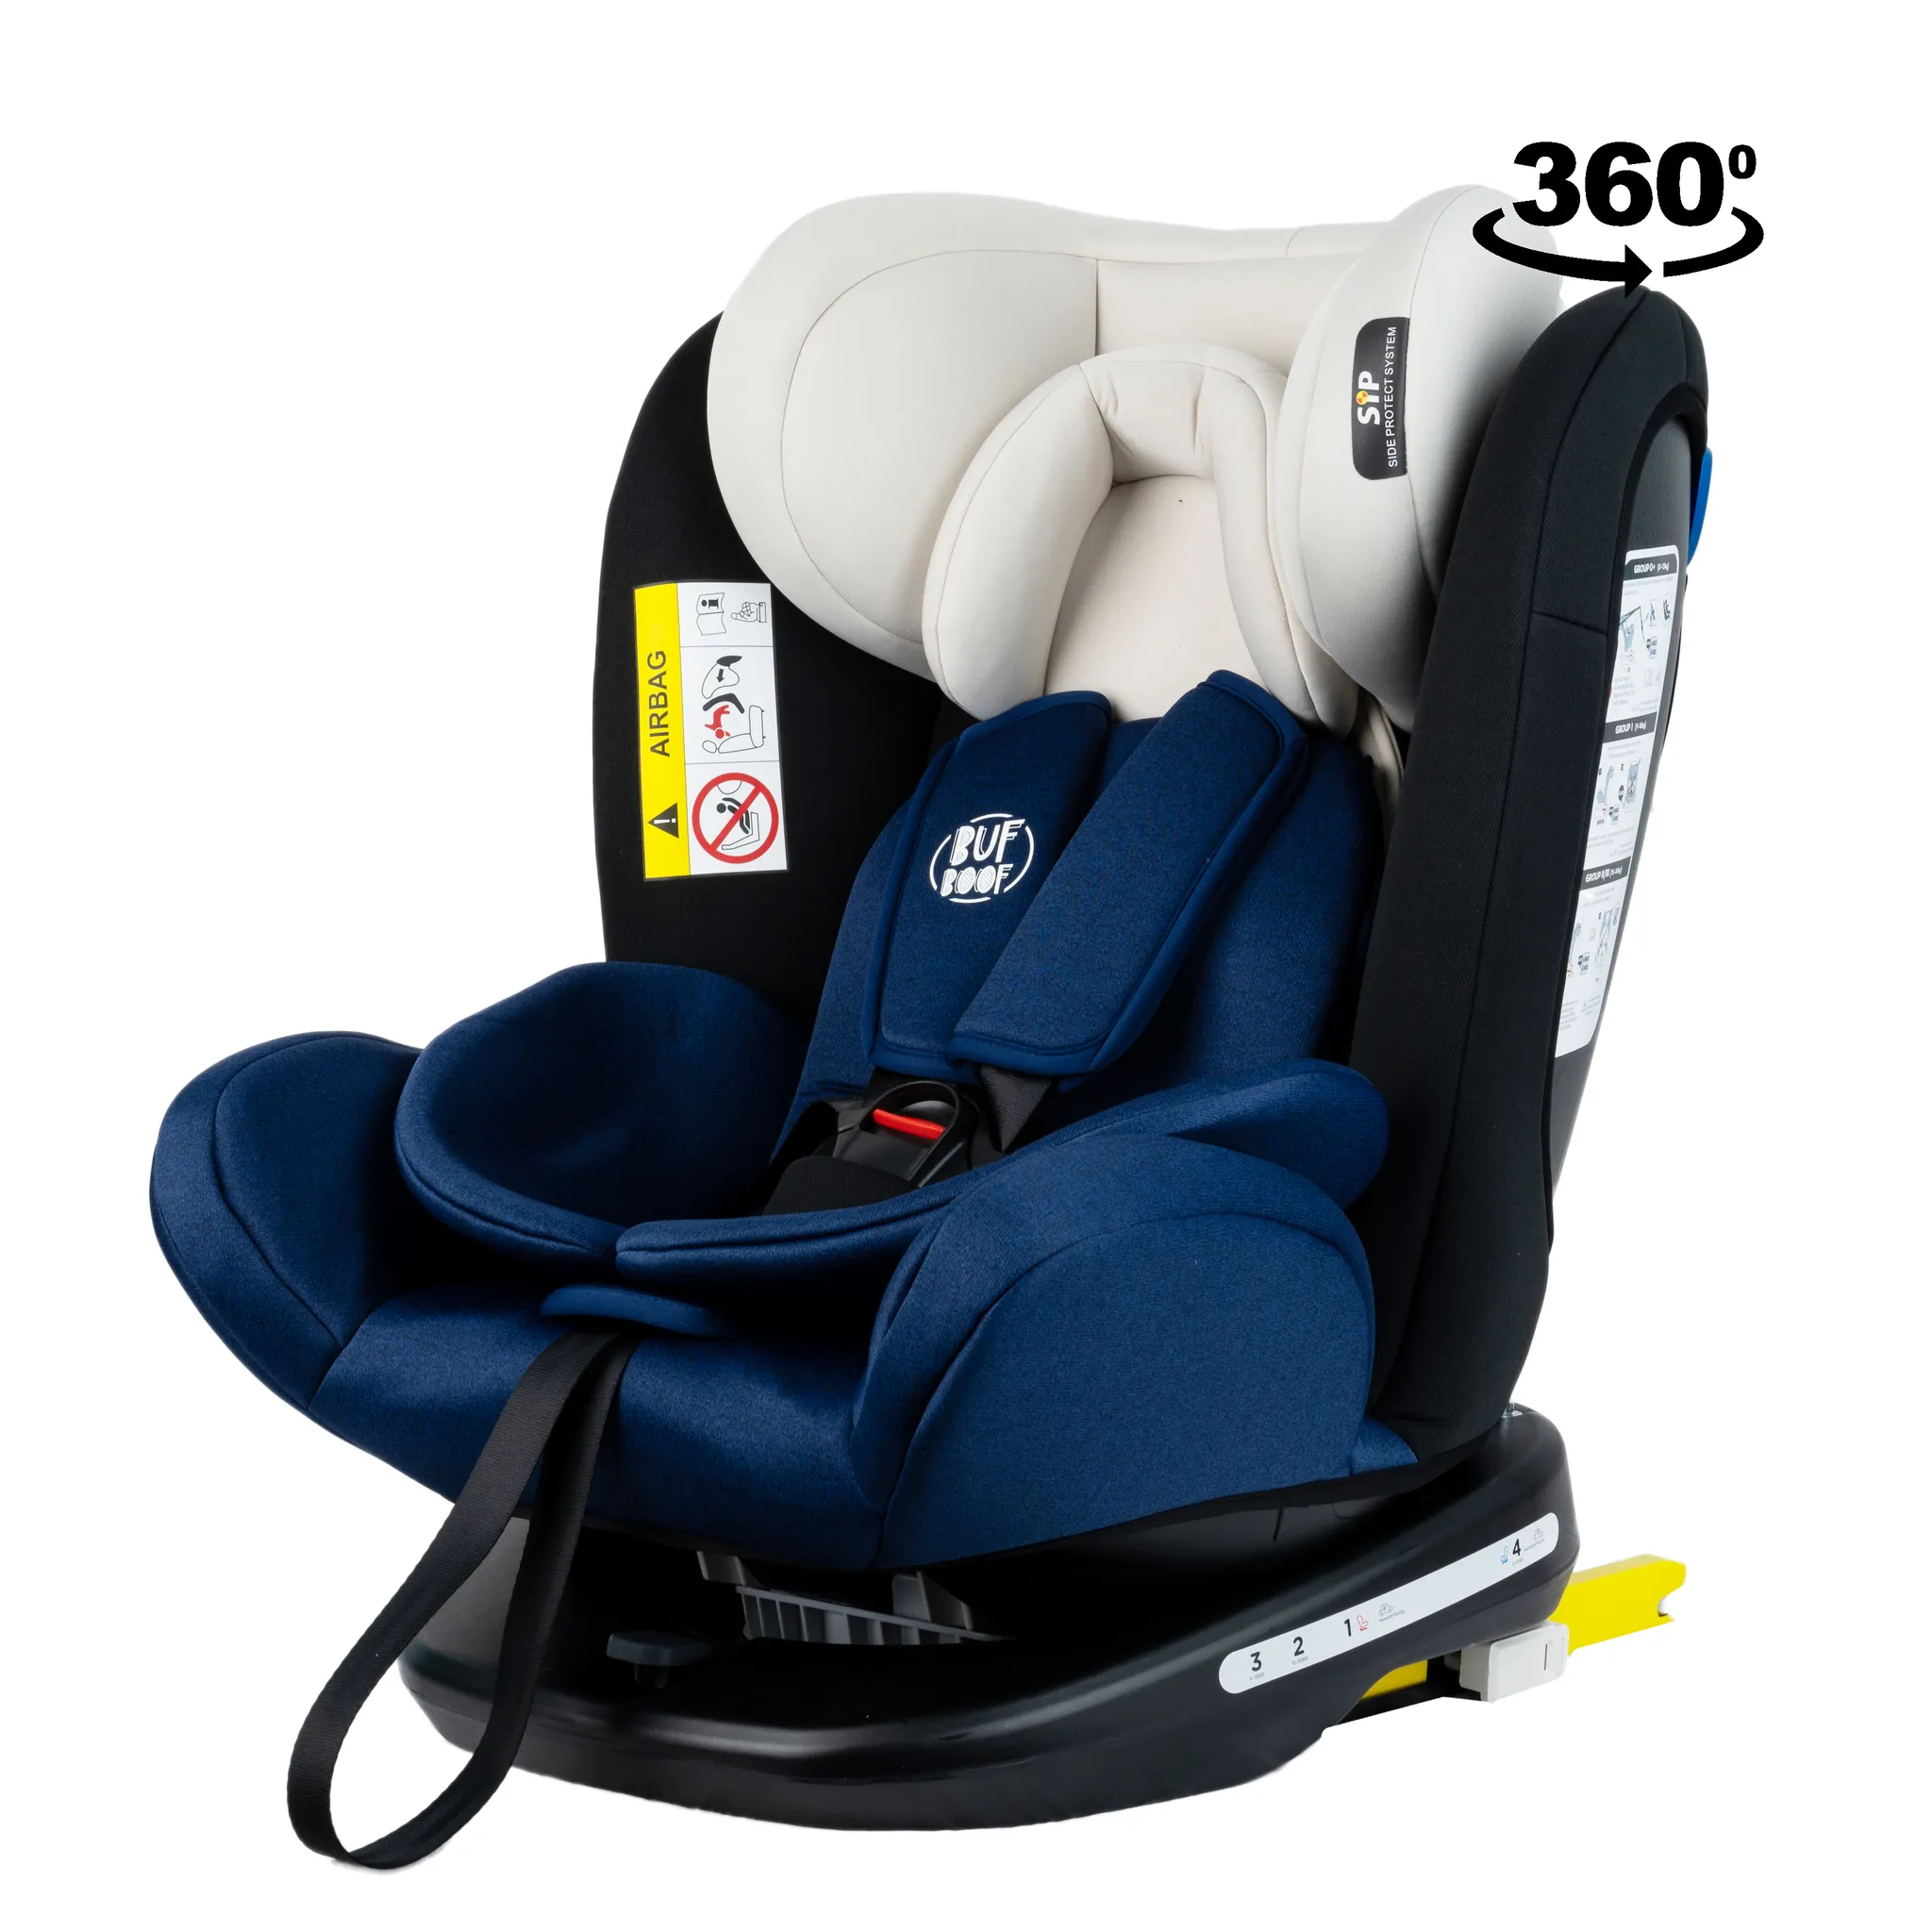 BABYLON  Babysitz Auto Indigo Isofix Baby & Kind Babyartikel Babyschalen & Kindersitze Kindersitze 